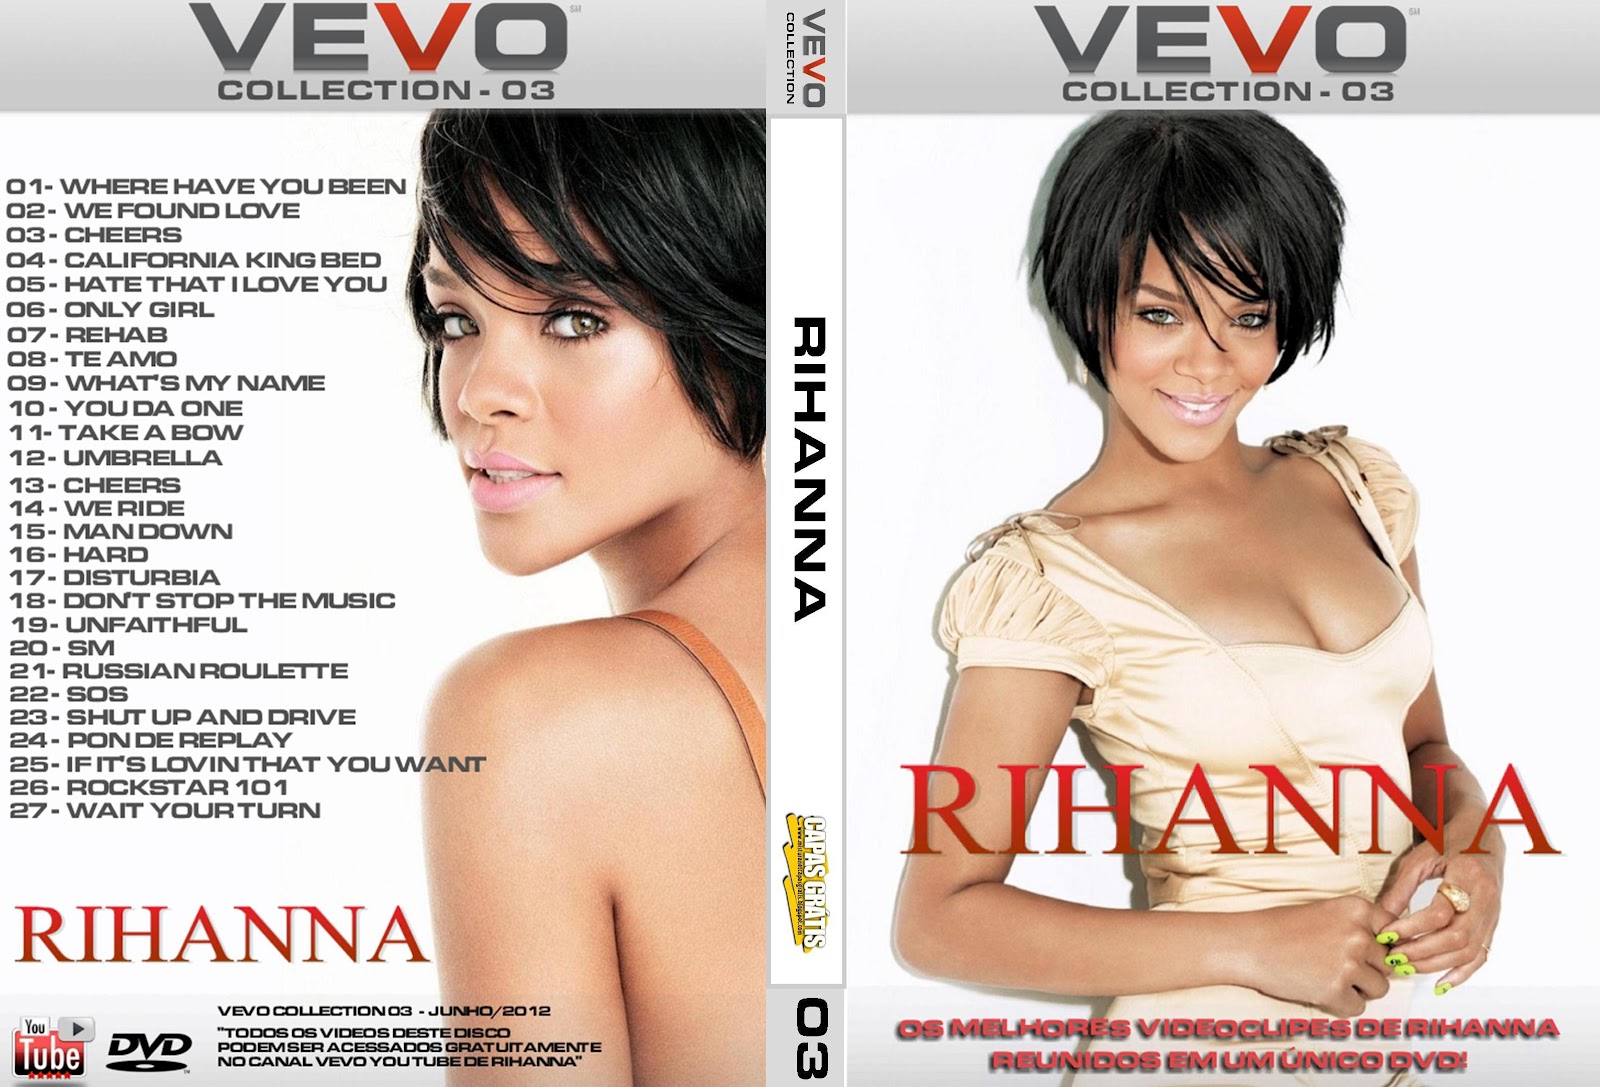 http://2.bp.blogspot.com/-w7O1WePVE98/T-fVT2ayVcI/AAAAAAAAAsk/FS5_UhymBJY/s1600/Vevo+-+Rihanna.jpg